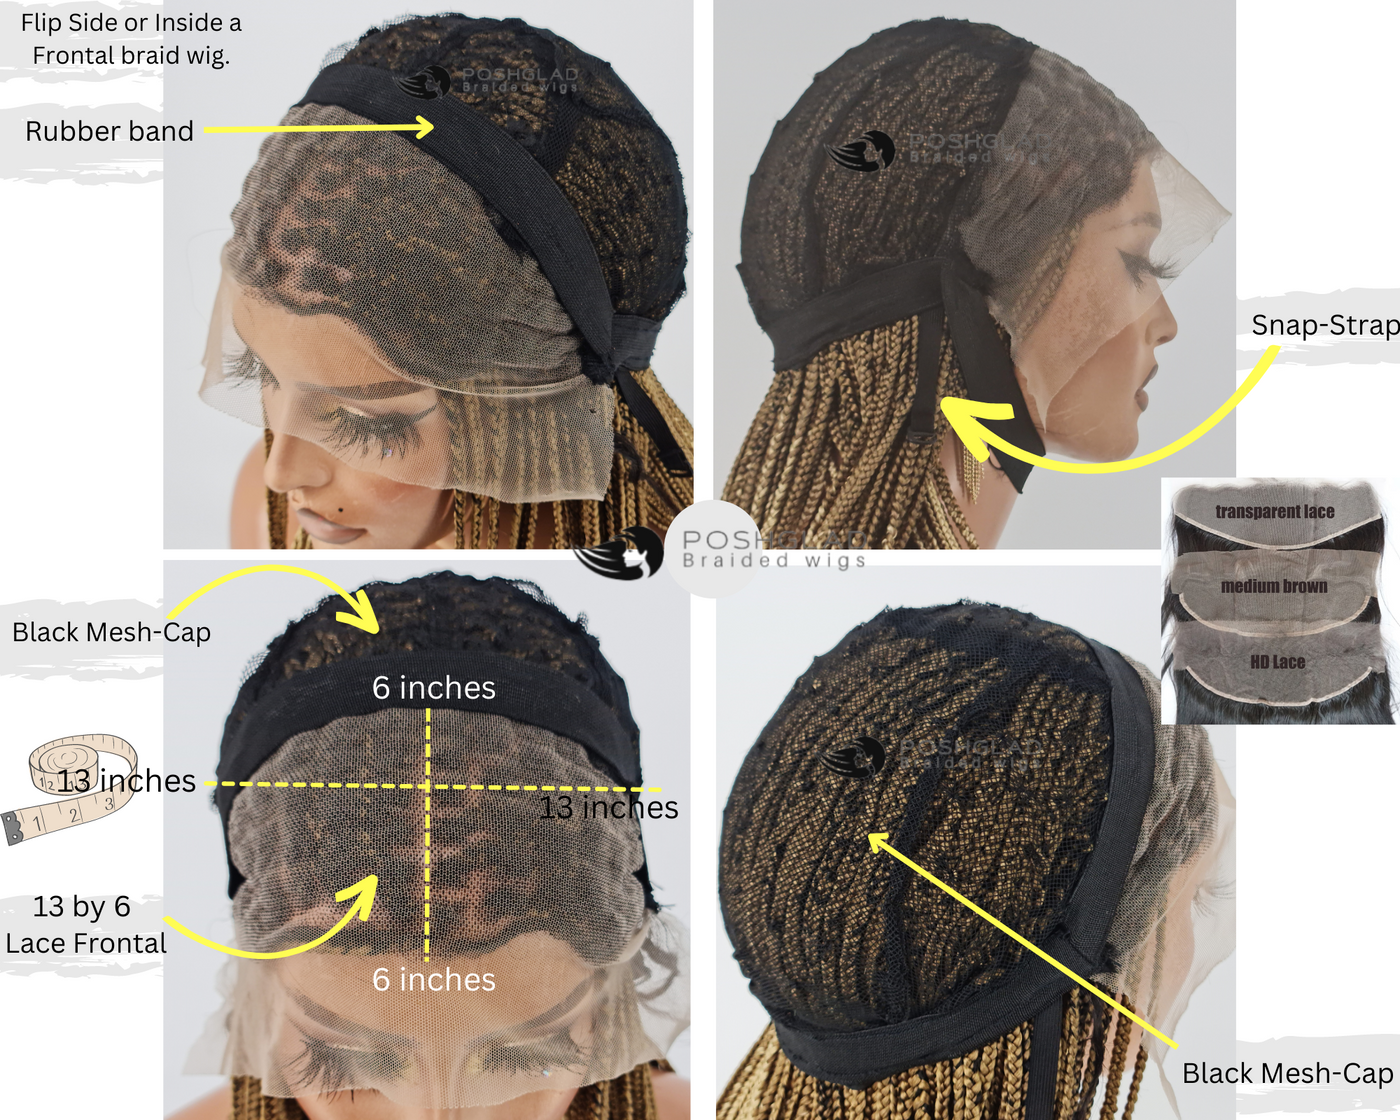 Cornrow Braided Wig "13 by 6 Frontal" - Bisi Poshglad Braided Wigs Cornrow Braided Wig